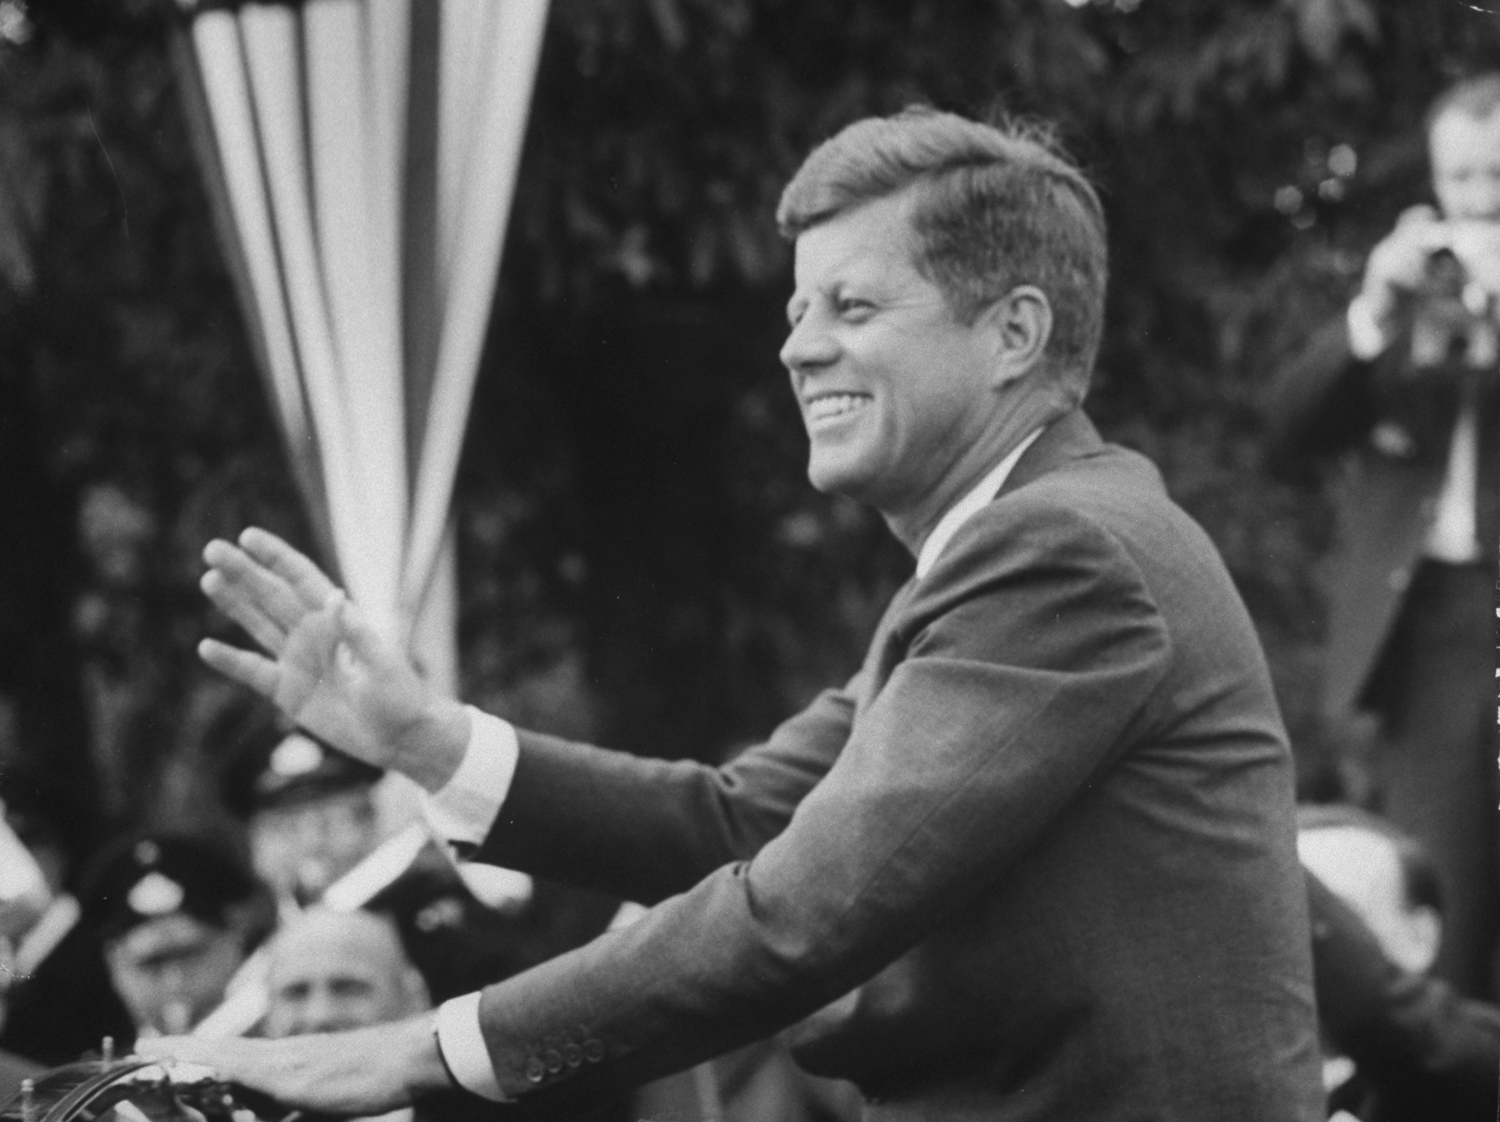 President John F. Kennedy waves at crowd during speech in Bonn, Germany, June 1963.